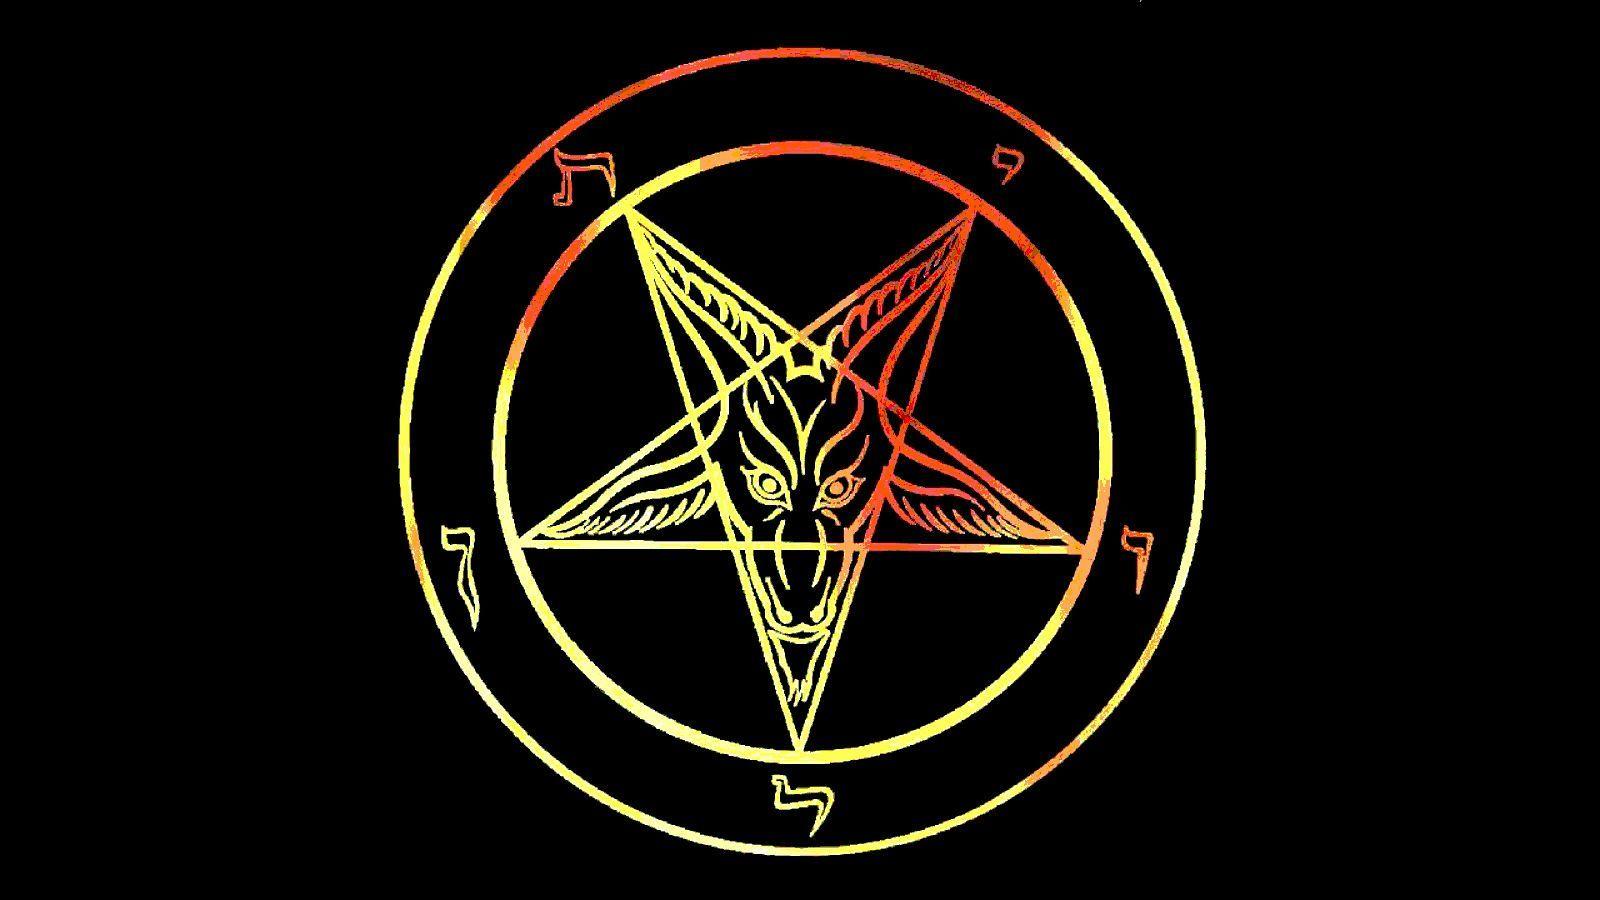 Satanic Symbols Wallpaper Click And Save Target As